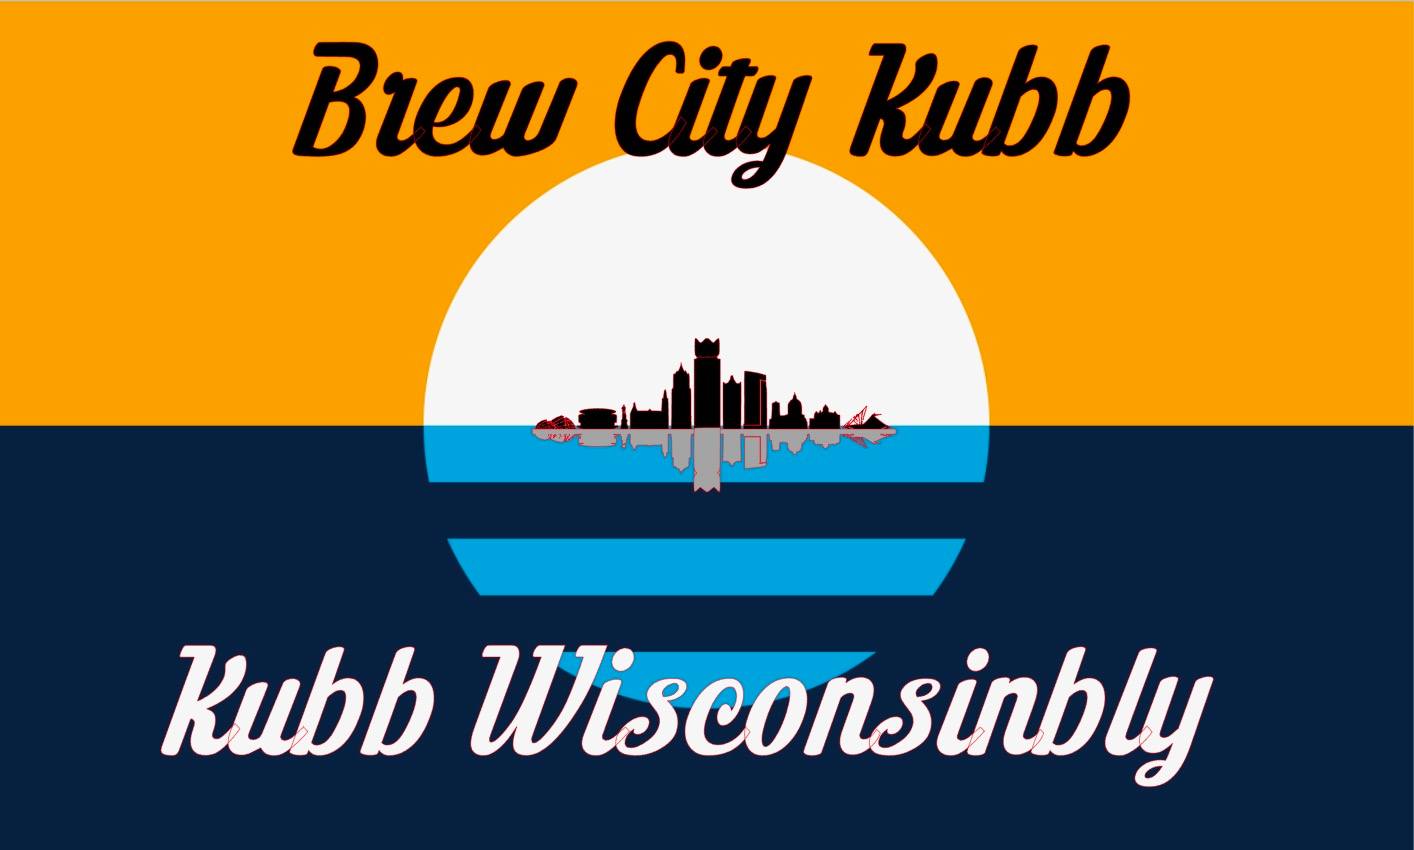 Brew City Kubb Club